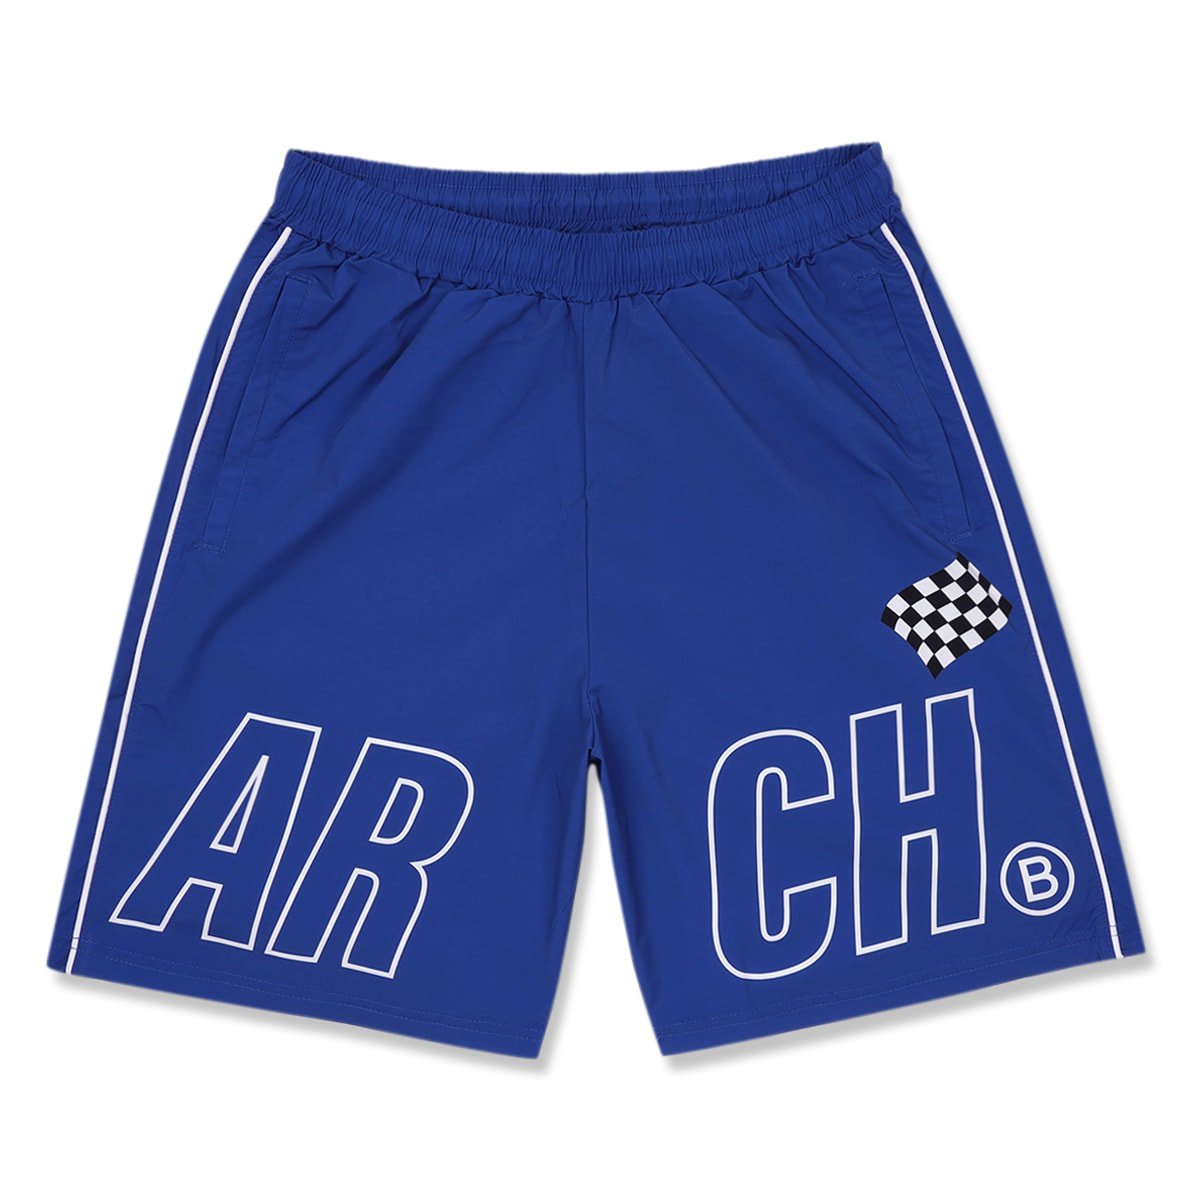 racing B shorts【blue】